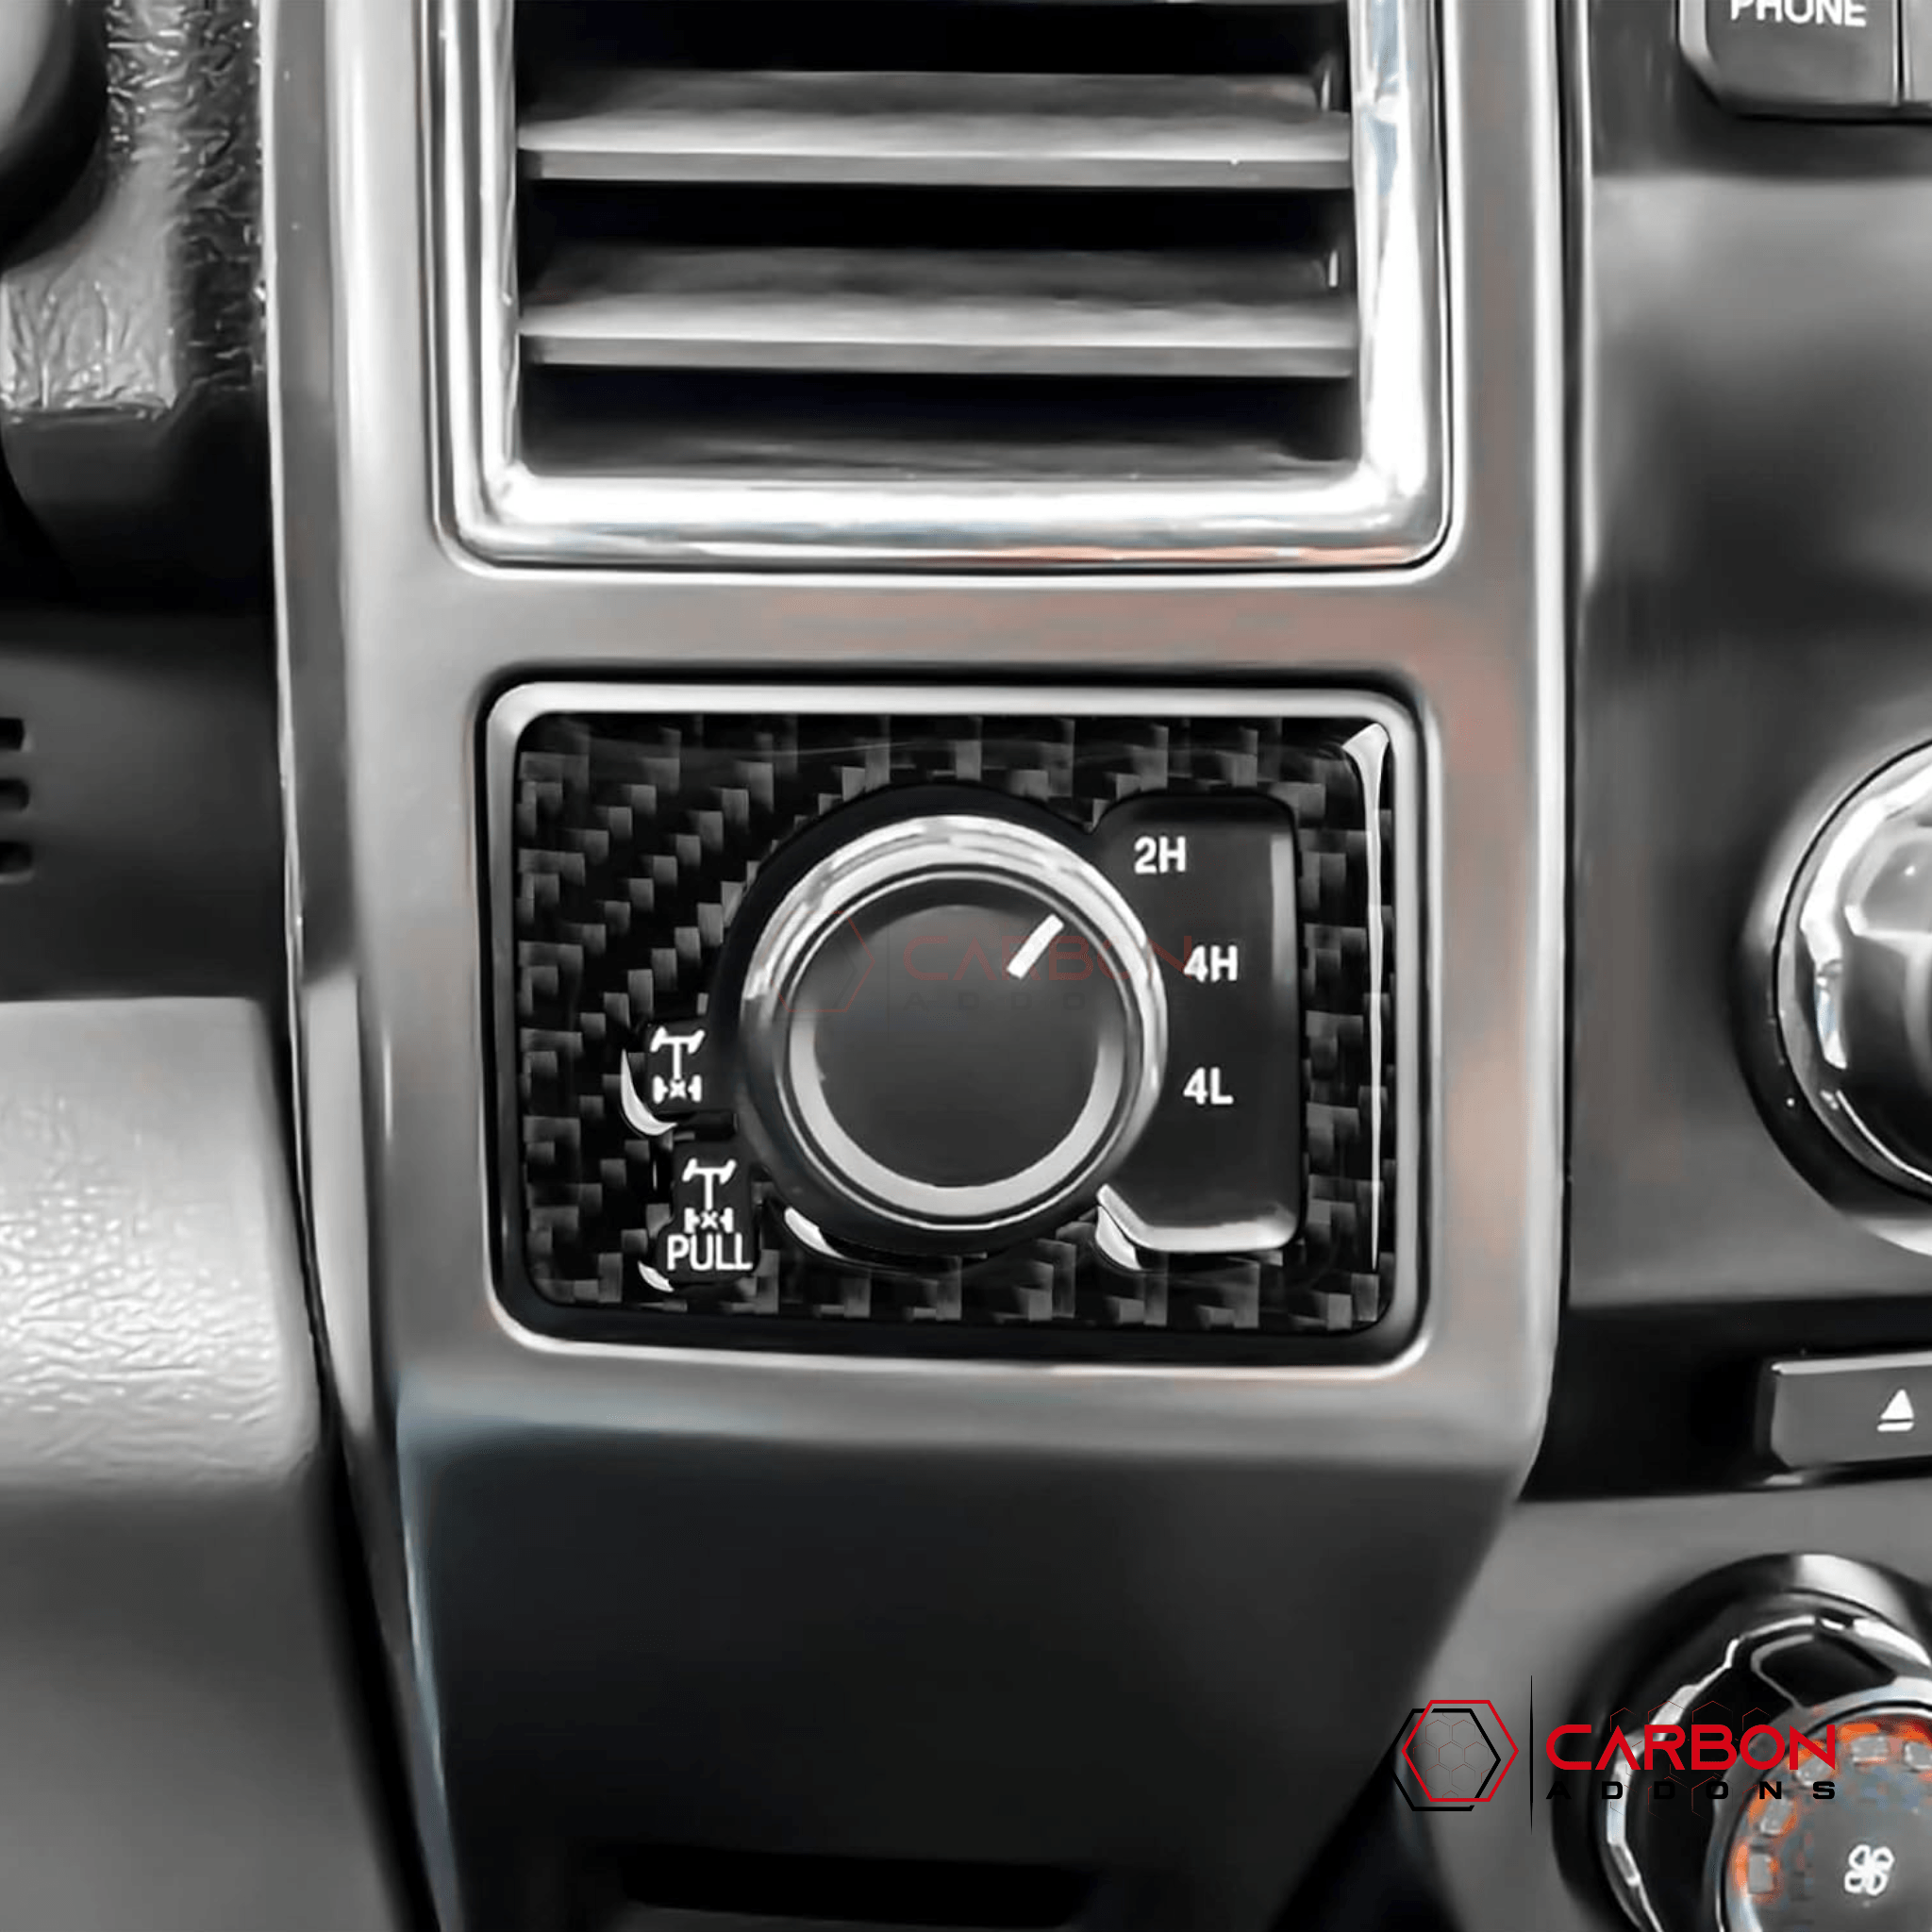 [2pcs] Real Carbon Dash Center AC Vent Control Trim Overlay | 2015-2020 Ford F150 - carbonaddons Carbon Fiber Parts, Accessories, Upgrades, Mods